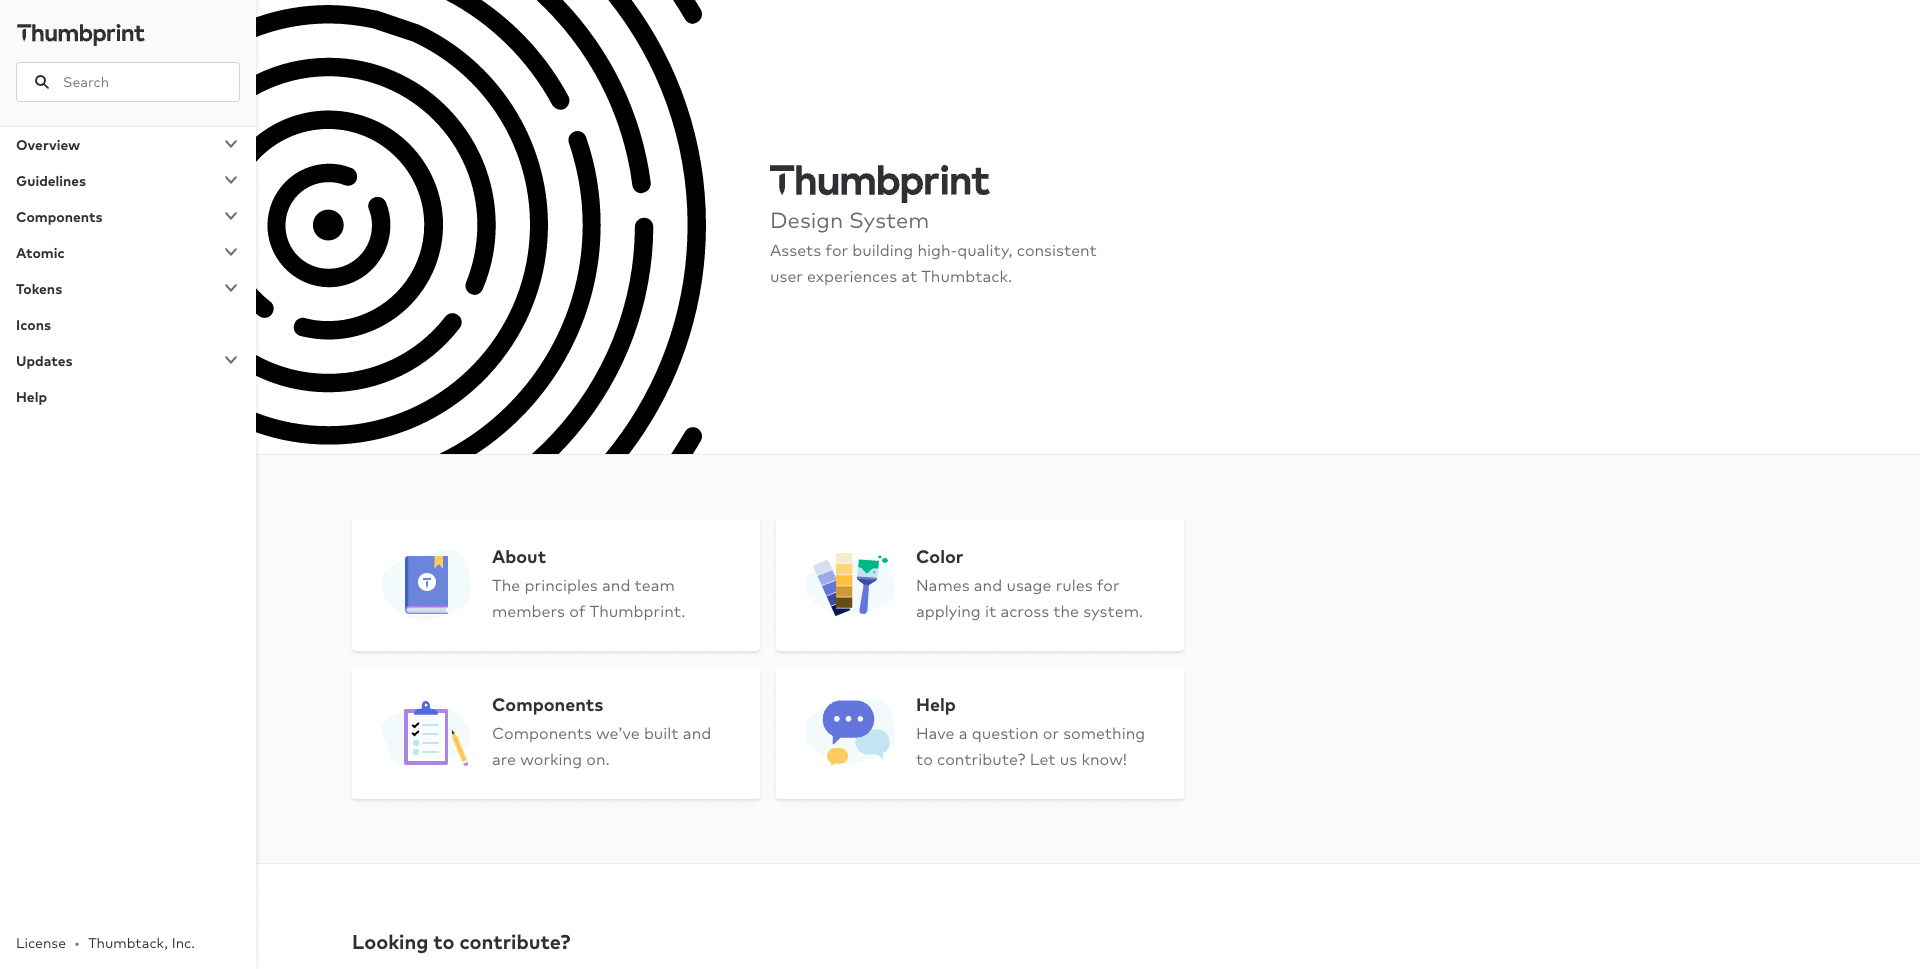 https://thumbprint.design/